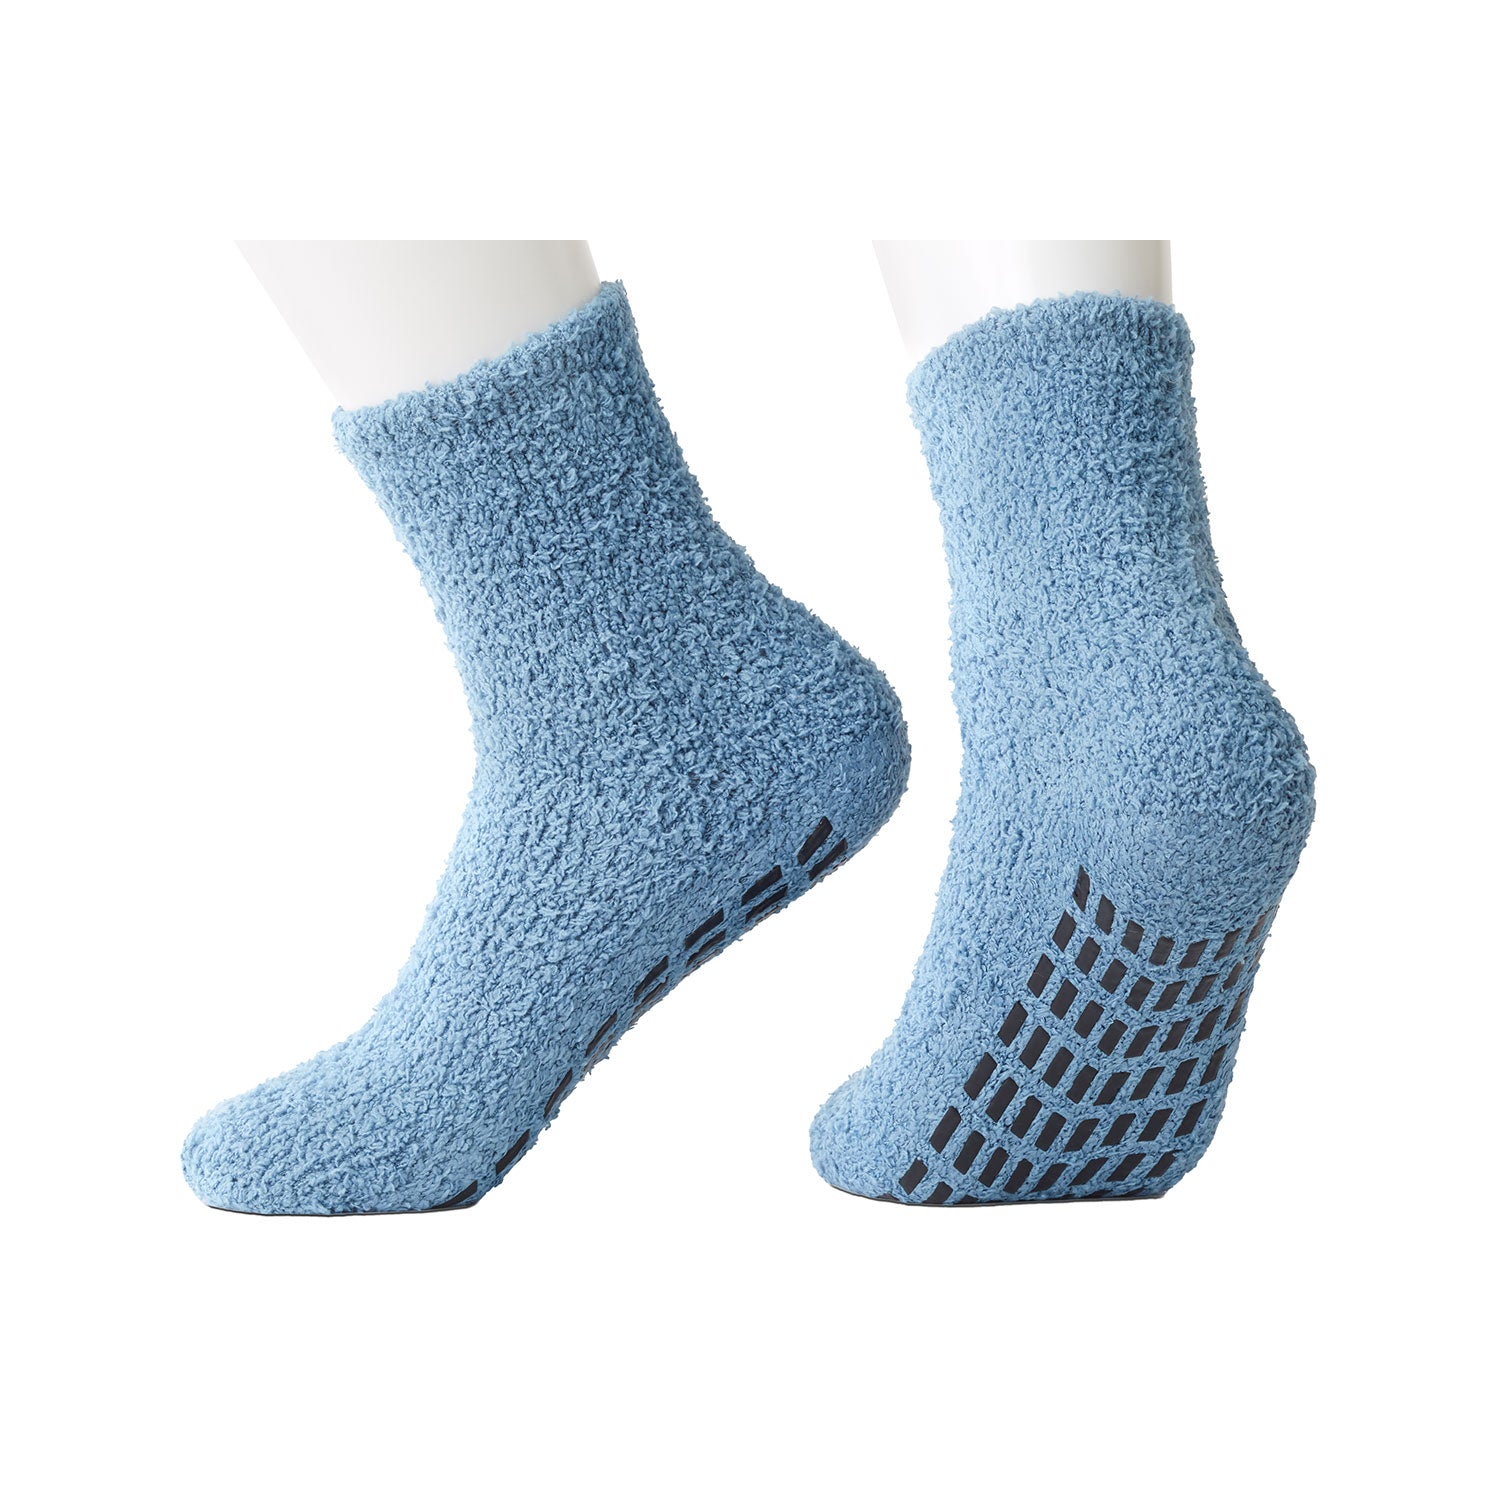 Tootsies Purple Women's Grippy Socks – Beau Ties of Vermont